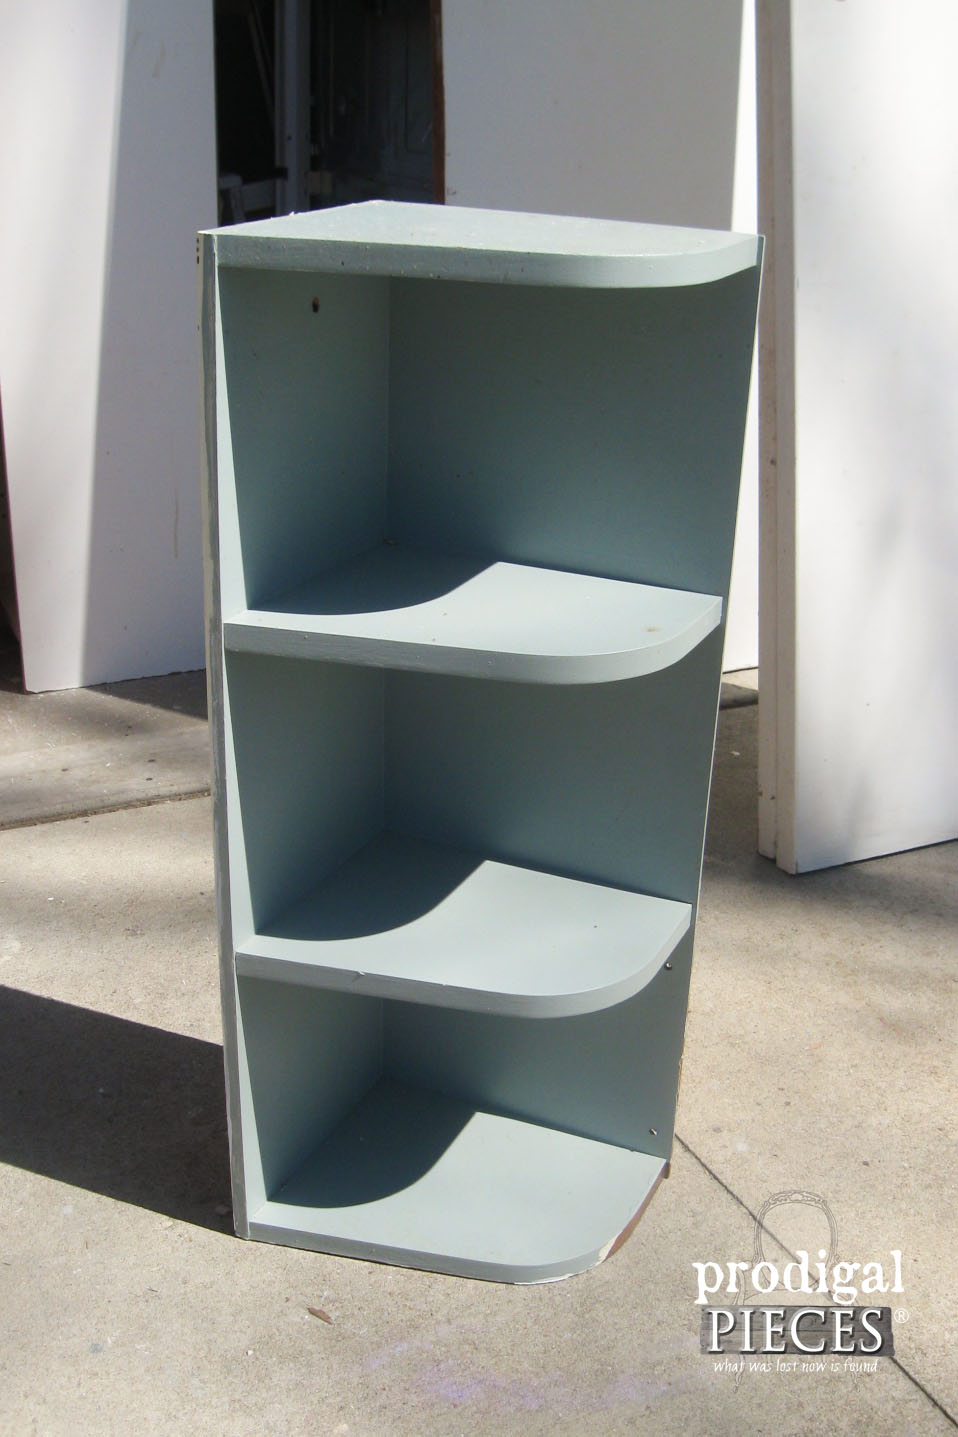 Kitchen Shelf Before Repurposed Storage Bins | Prodigal Pieces | www.prodigalpieces.com